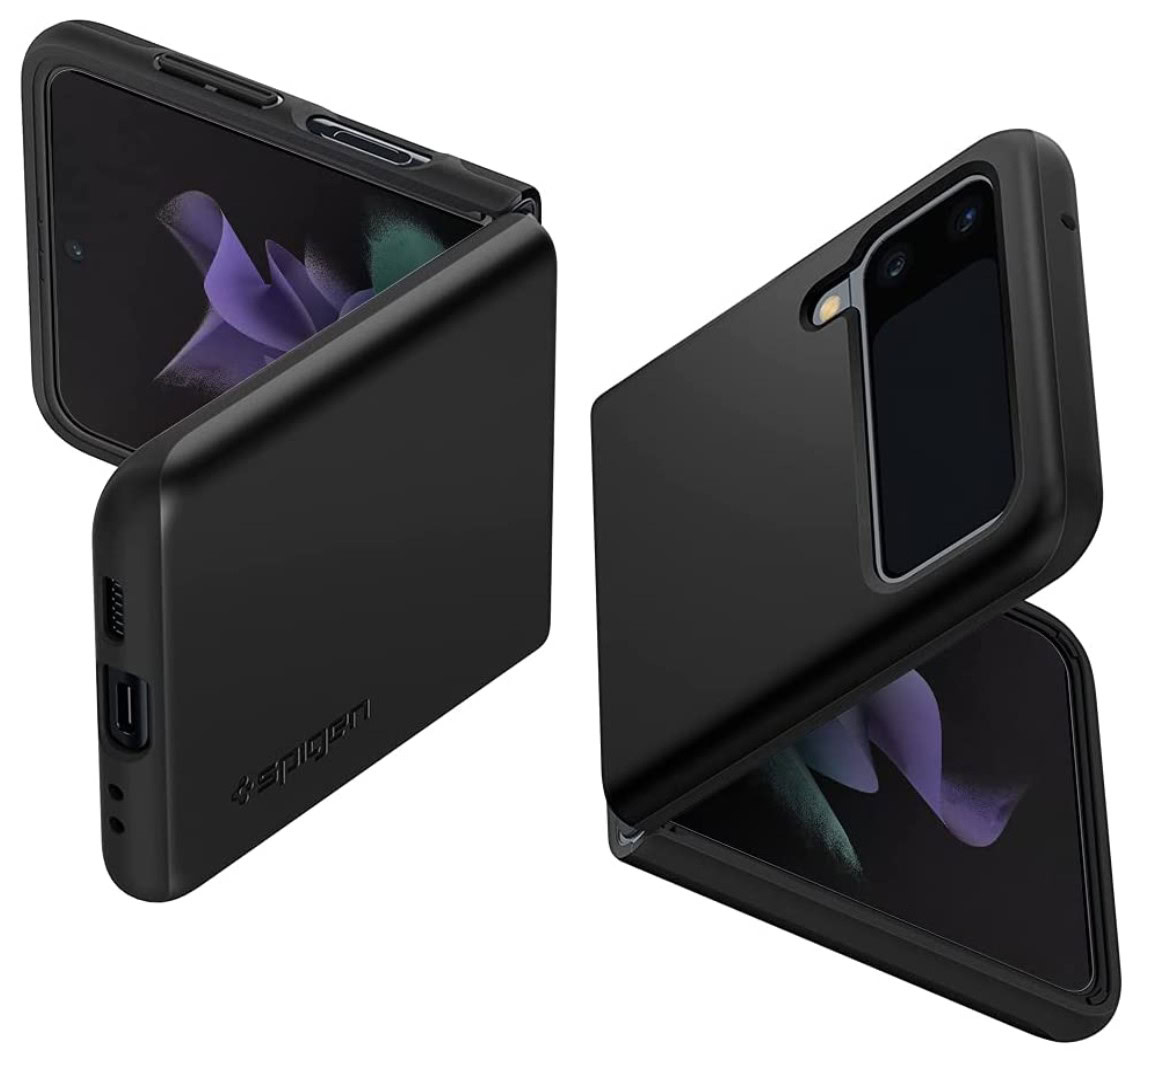 vice versa Telegraaf Nadeel The best Samsung Galaxy Z Flip 3 cases you can get in 2022